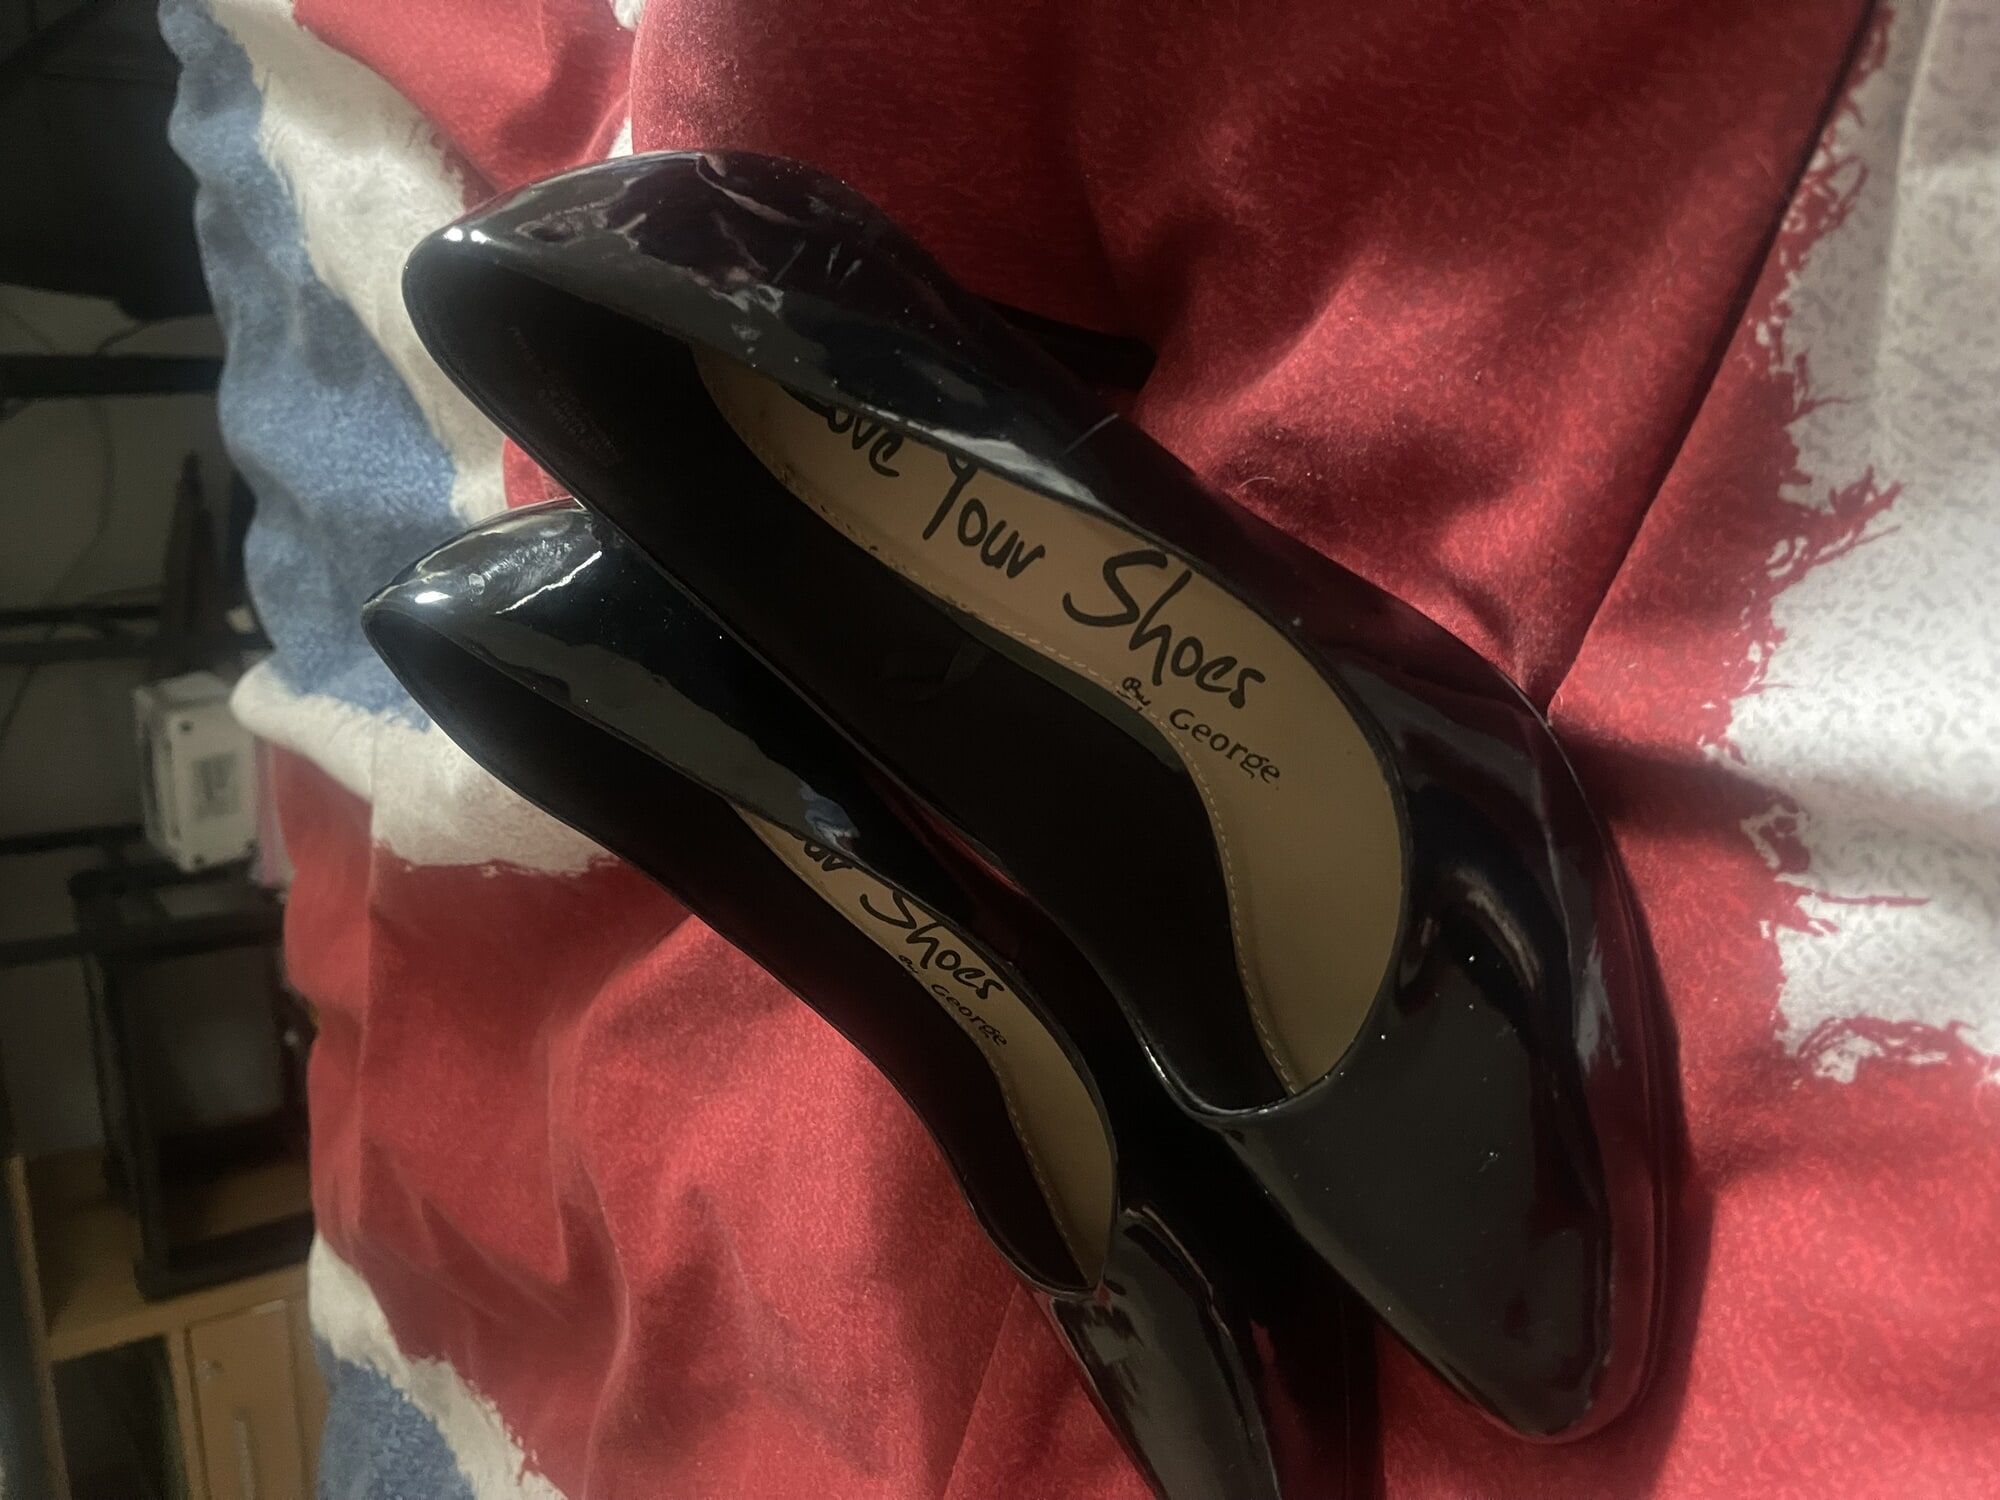 New patent black heels #2